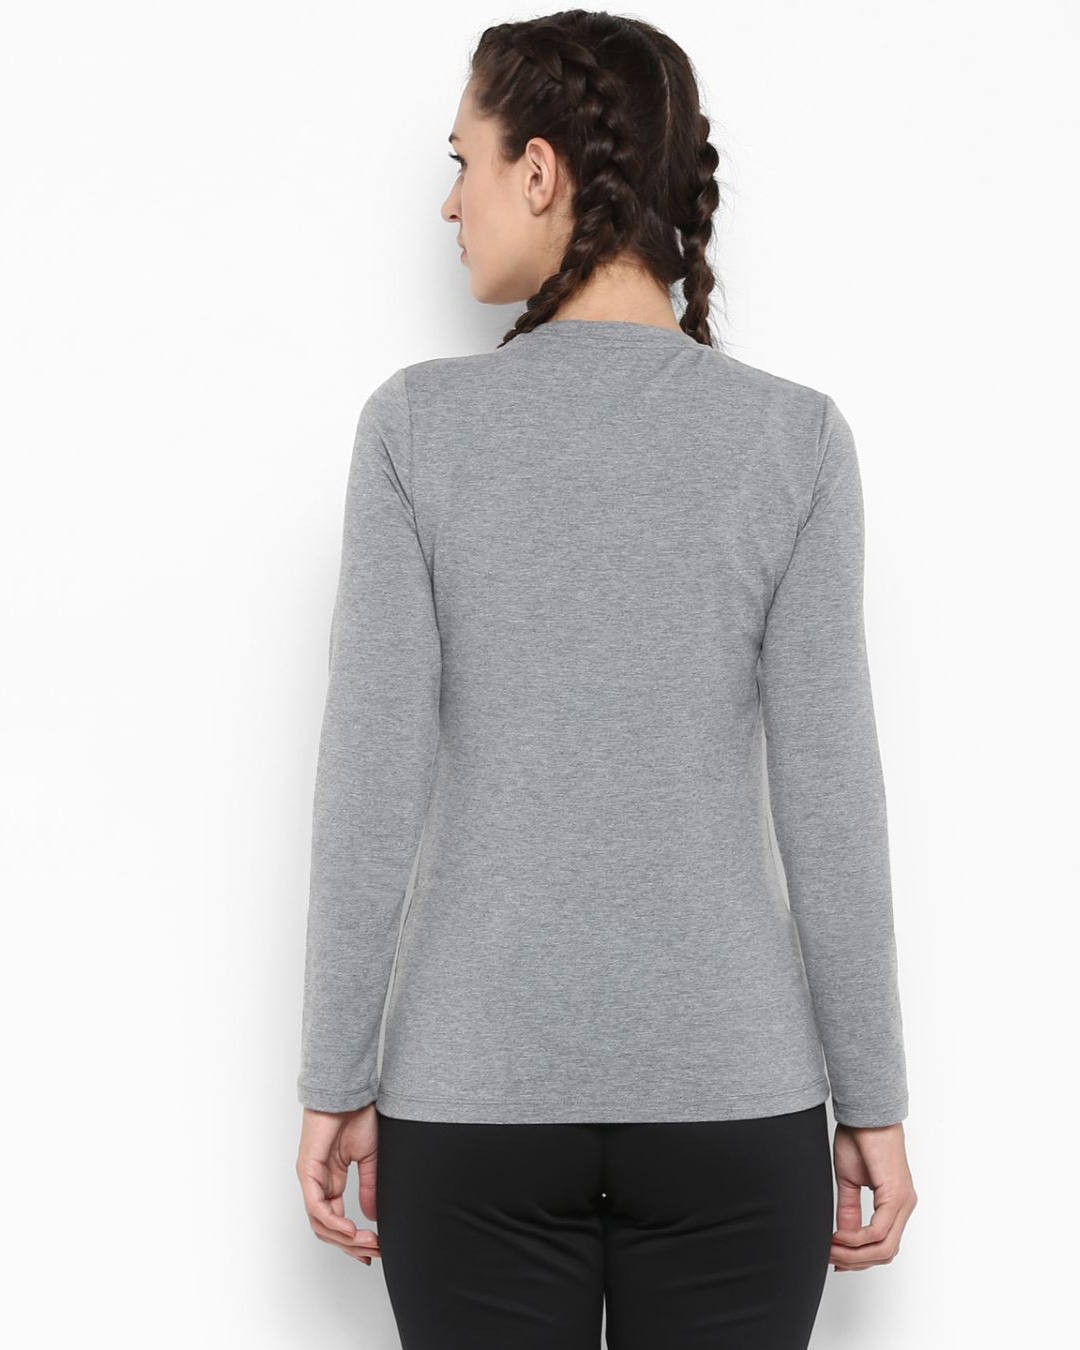 Shop Women's Grey Slim Fit T-shirt-Back